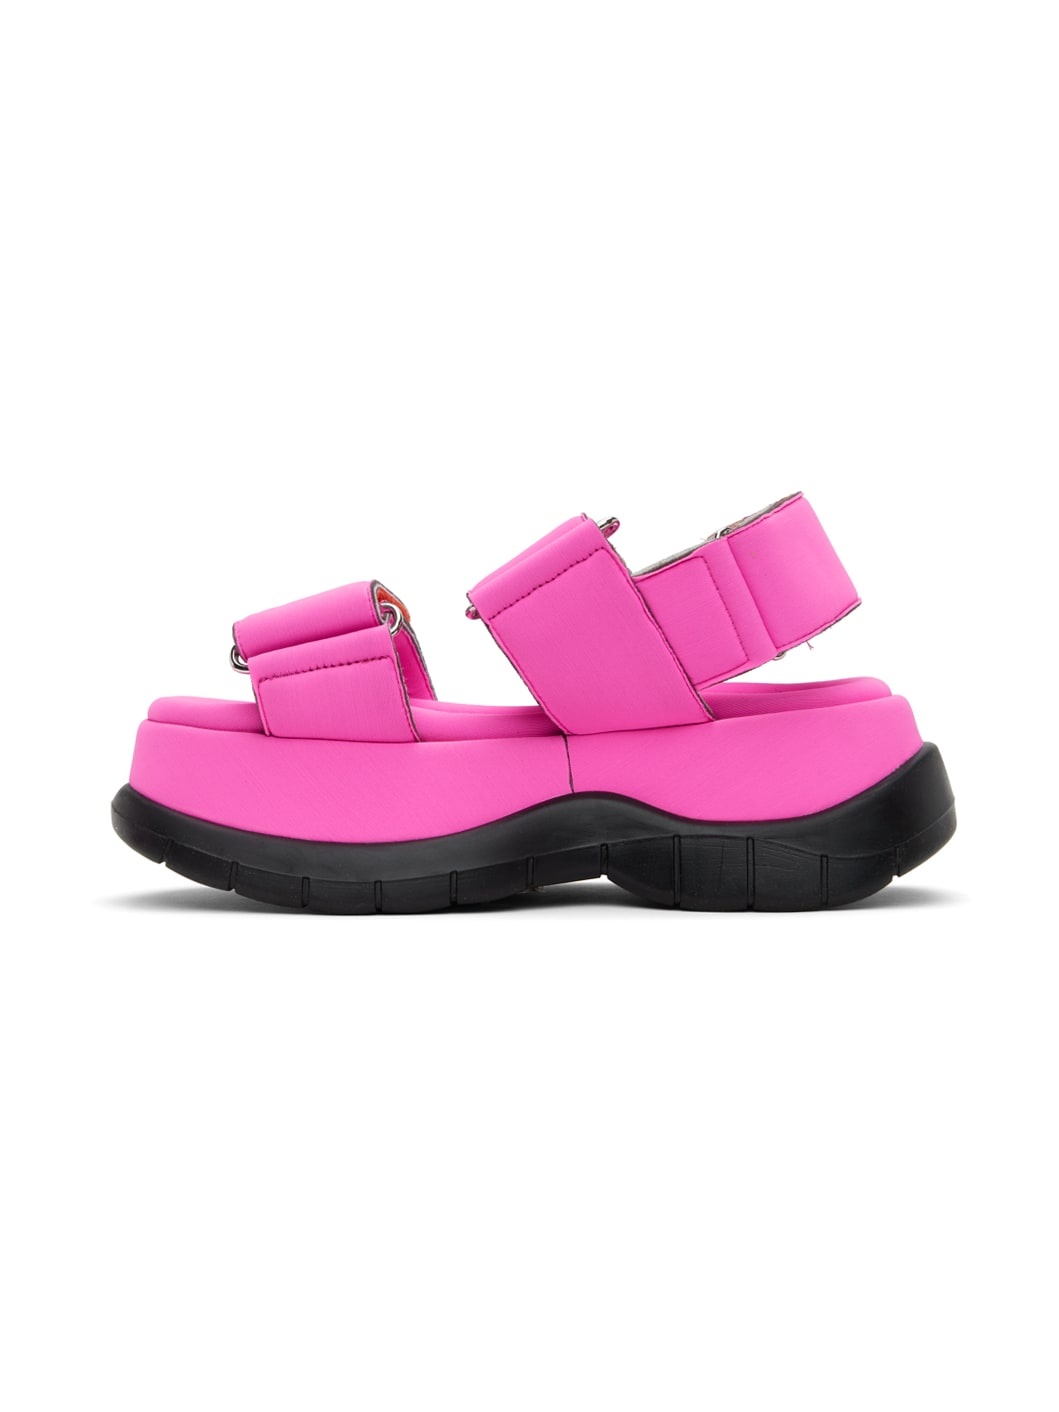 SSENSE Exclusive Pink Low Platform Sandals - 3